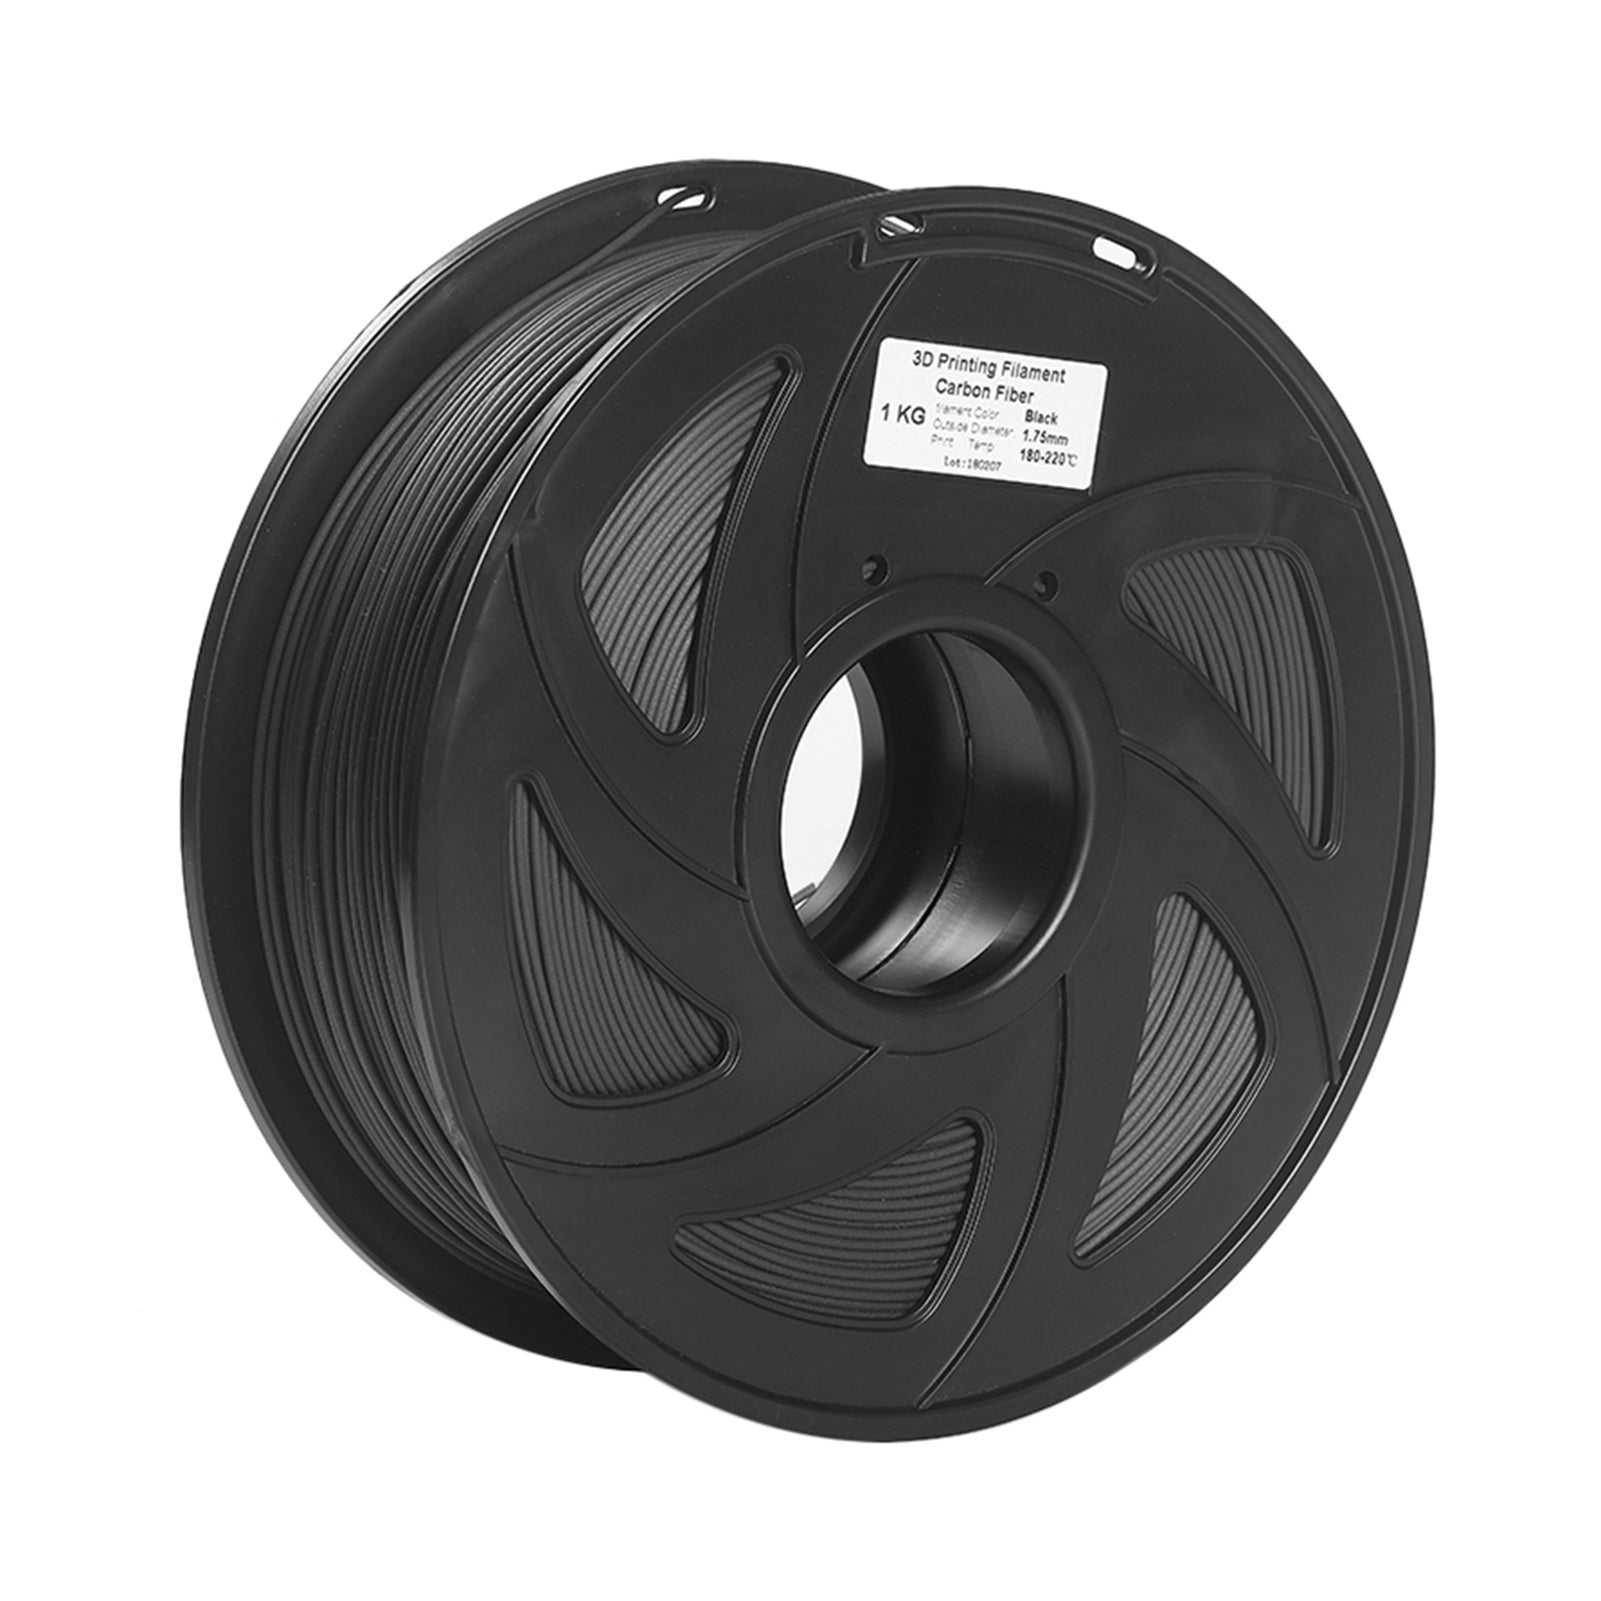 1kg Spool Carbon Fiber and PLA Filament 1.75mm diameter printing consumables for 3D Printer